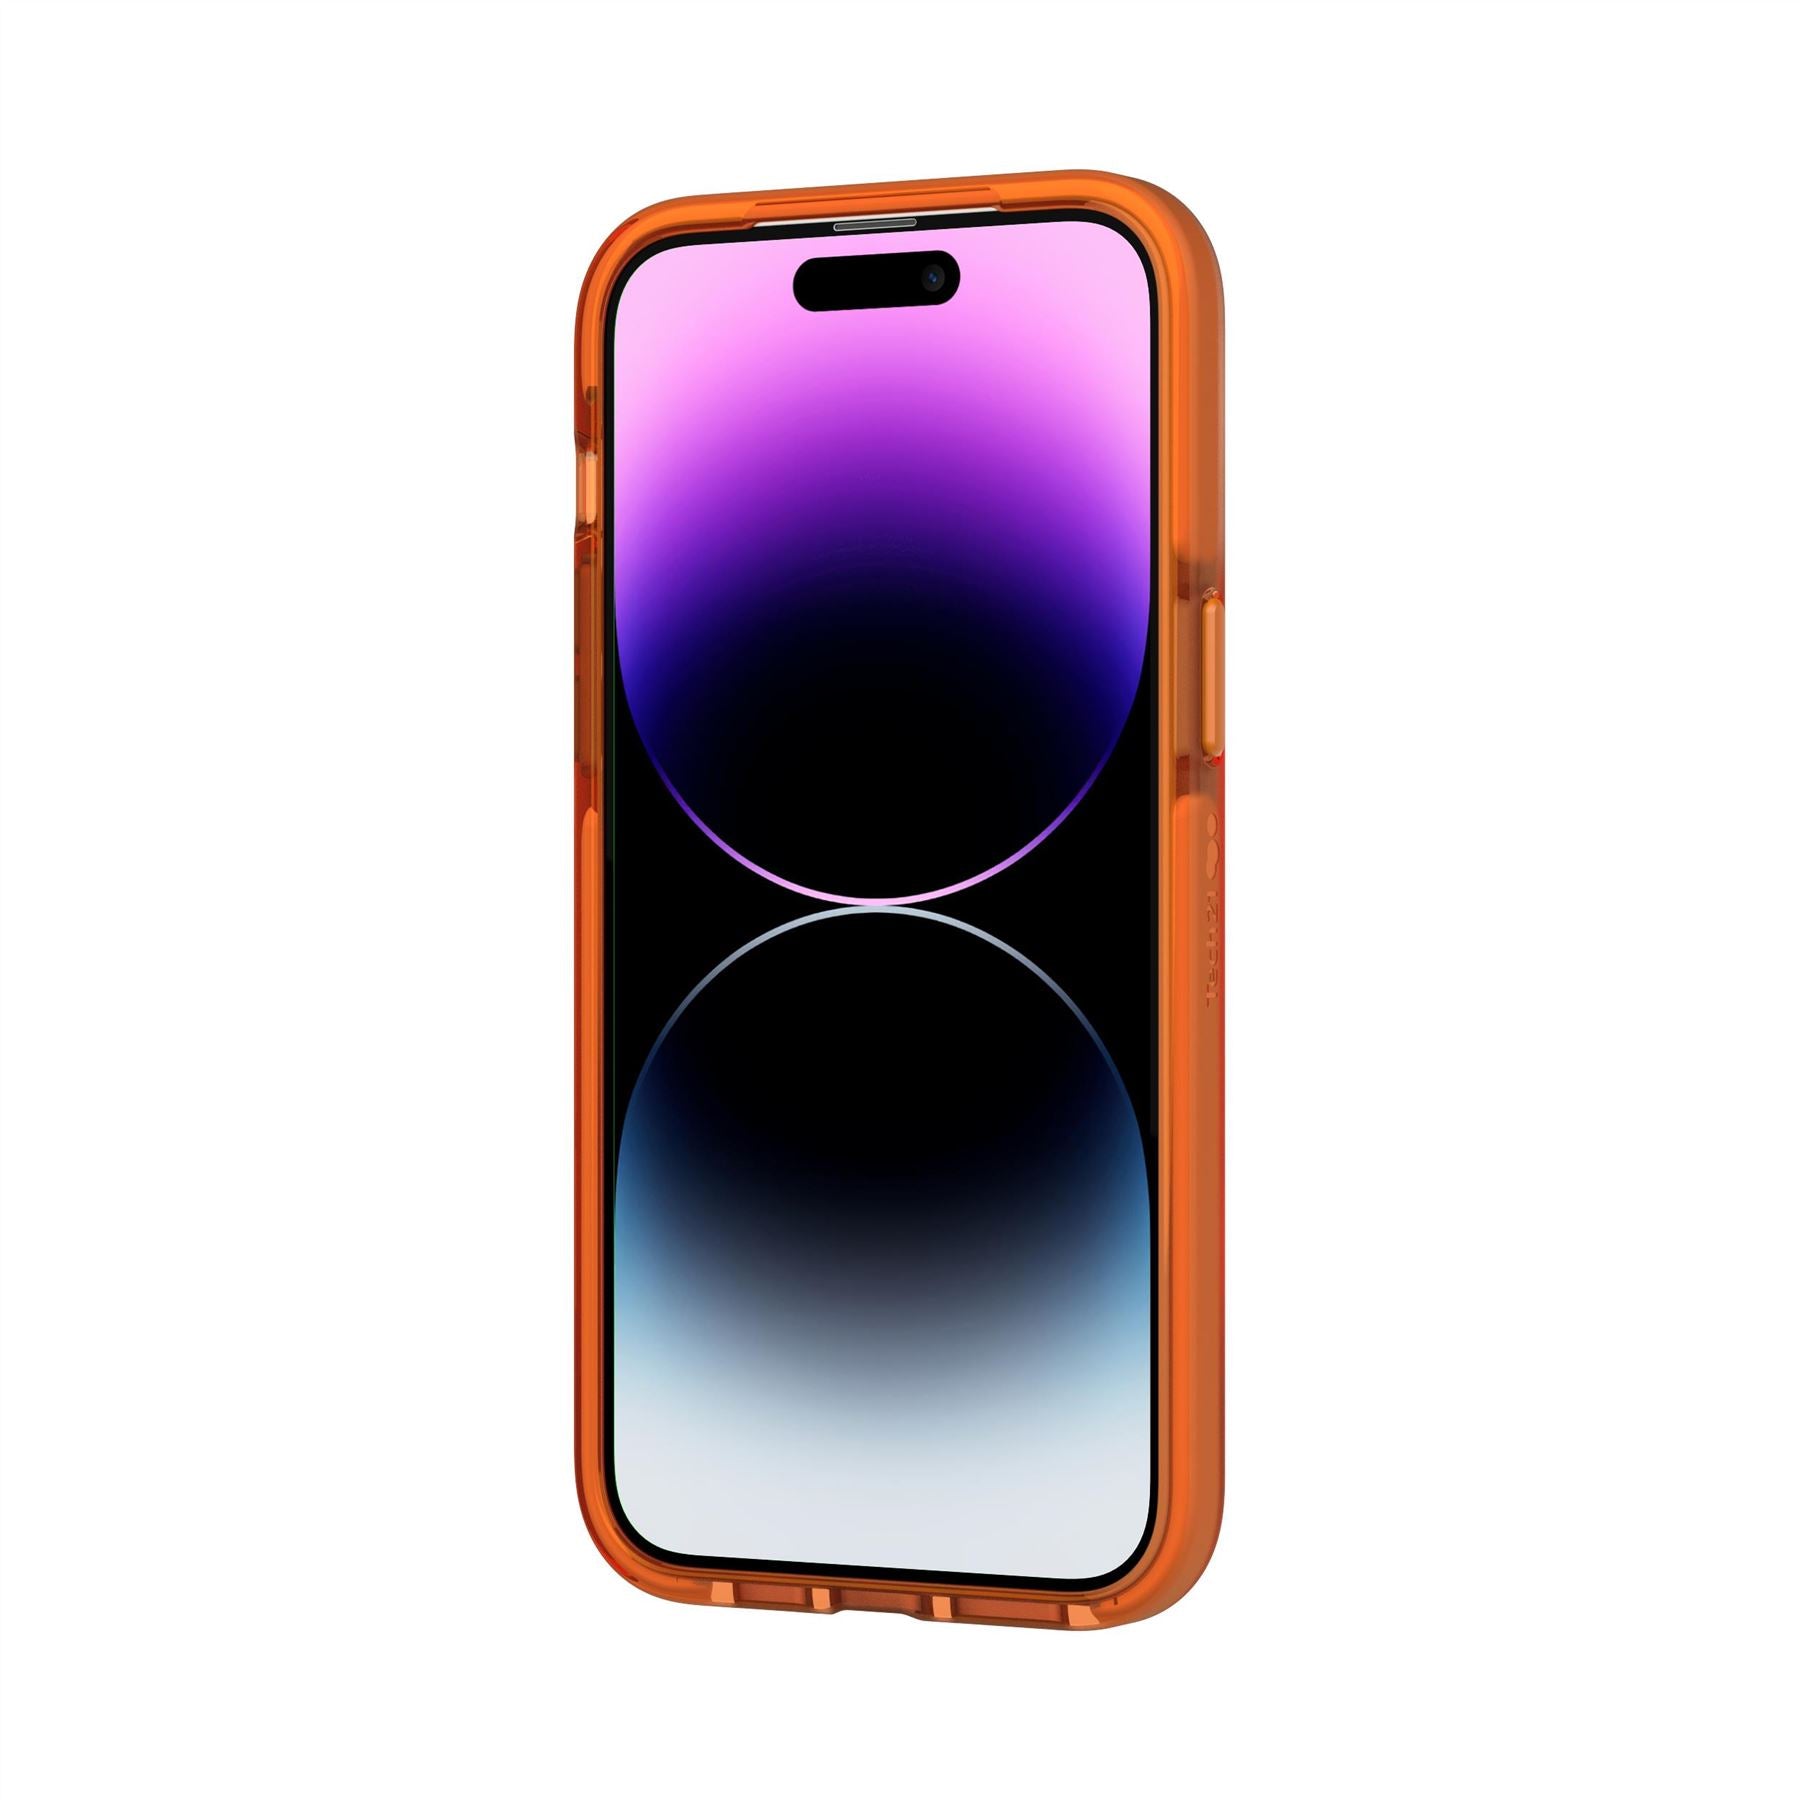 Hermes Orange Check iPhone 12 Pro Max Case